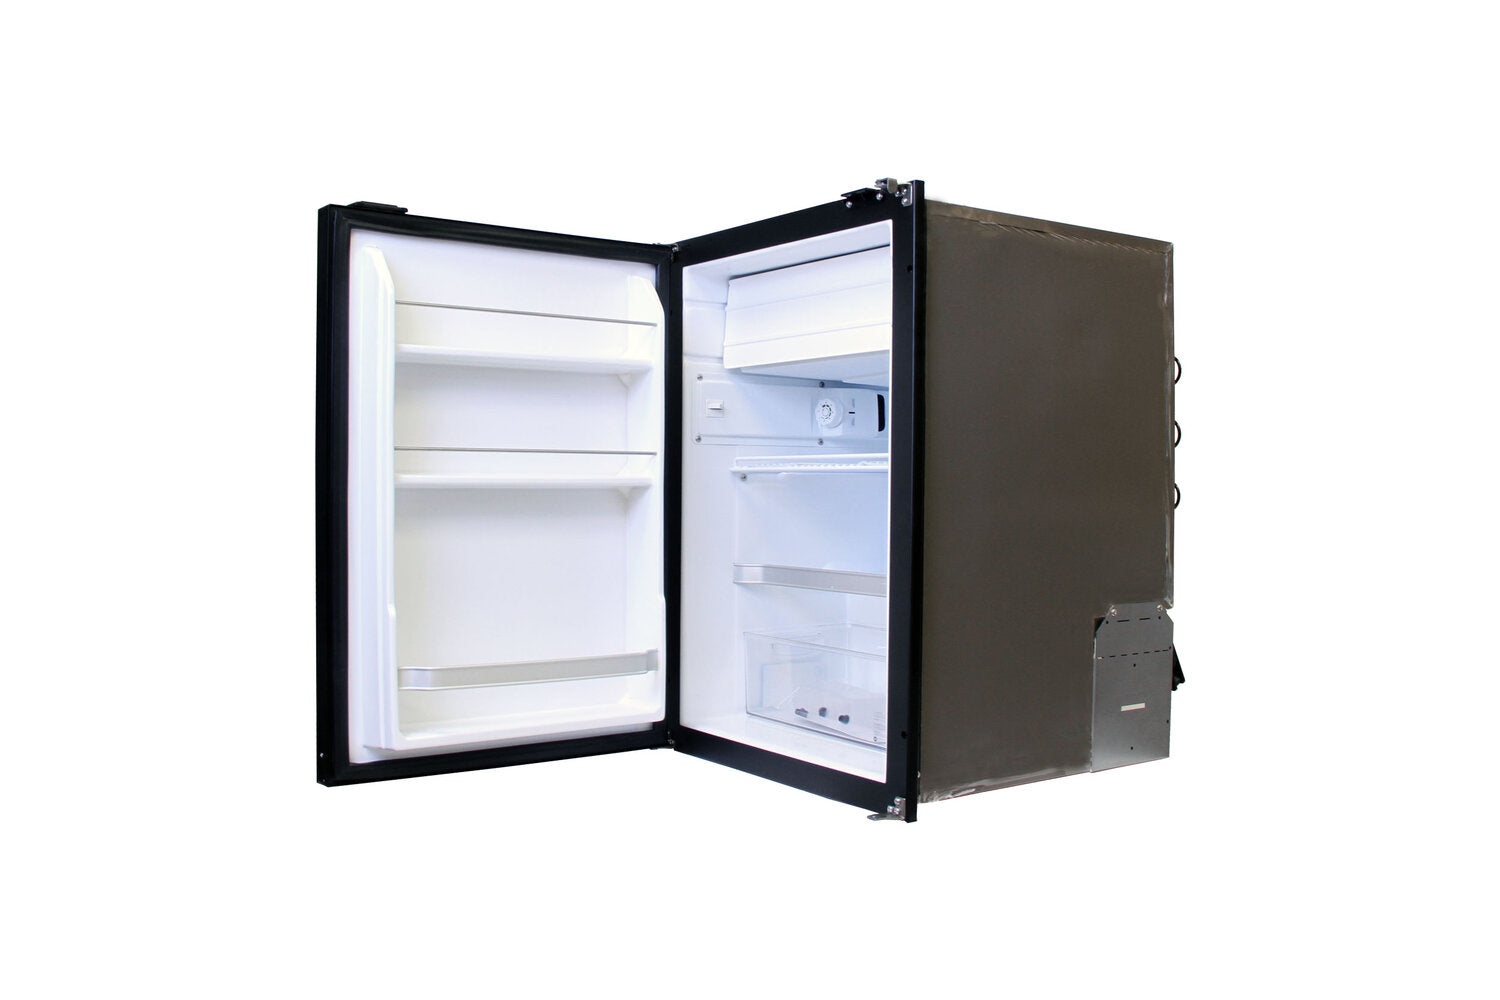 NOVA KOOL R4500 4.3 cf. RV Van Conversion 12V Refrigerator with Freezer